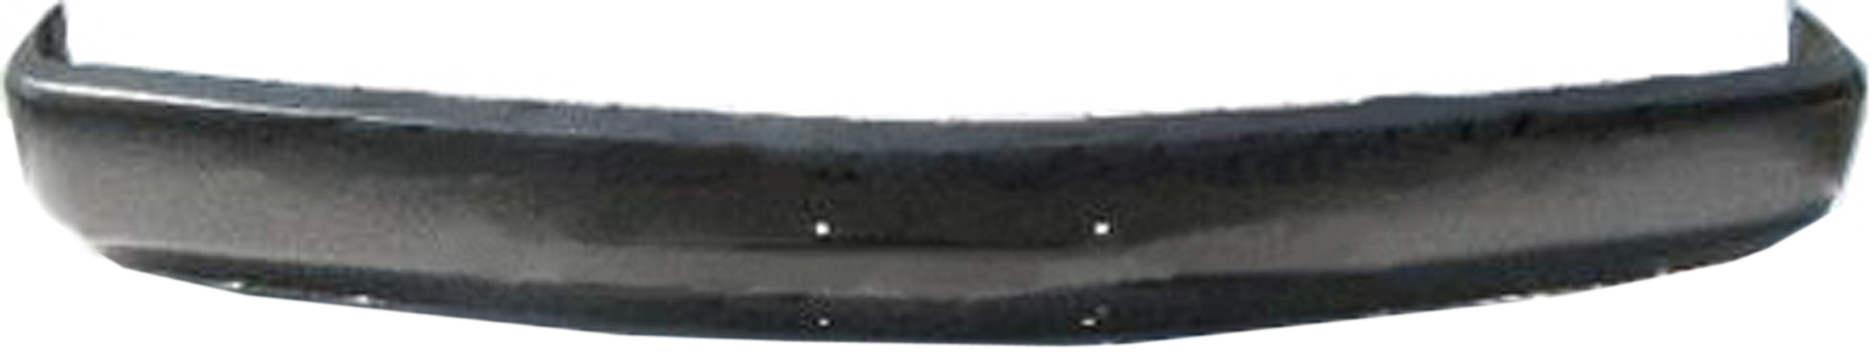 Aftermarket METAL FRONT BUMPERS for GMC - K2500, K2500,88-00,Front bumper face bar